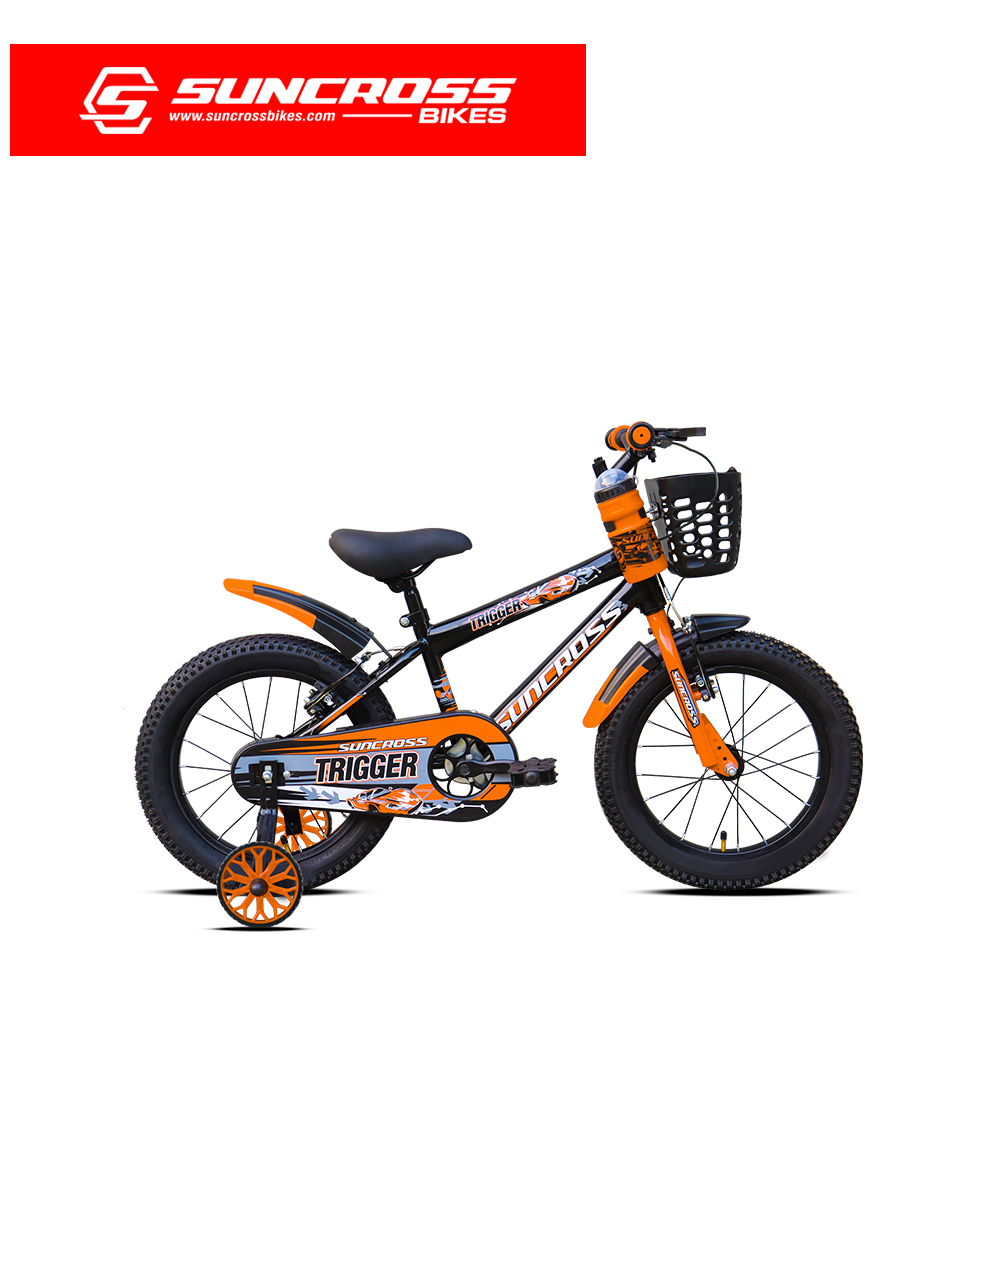 TRIGGER S/S Bike Shop Online, Buy SUNCROSS. Bike, KIDS Cycle